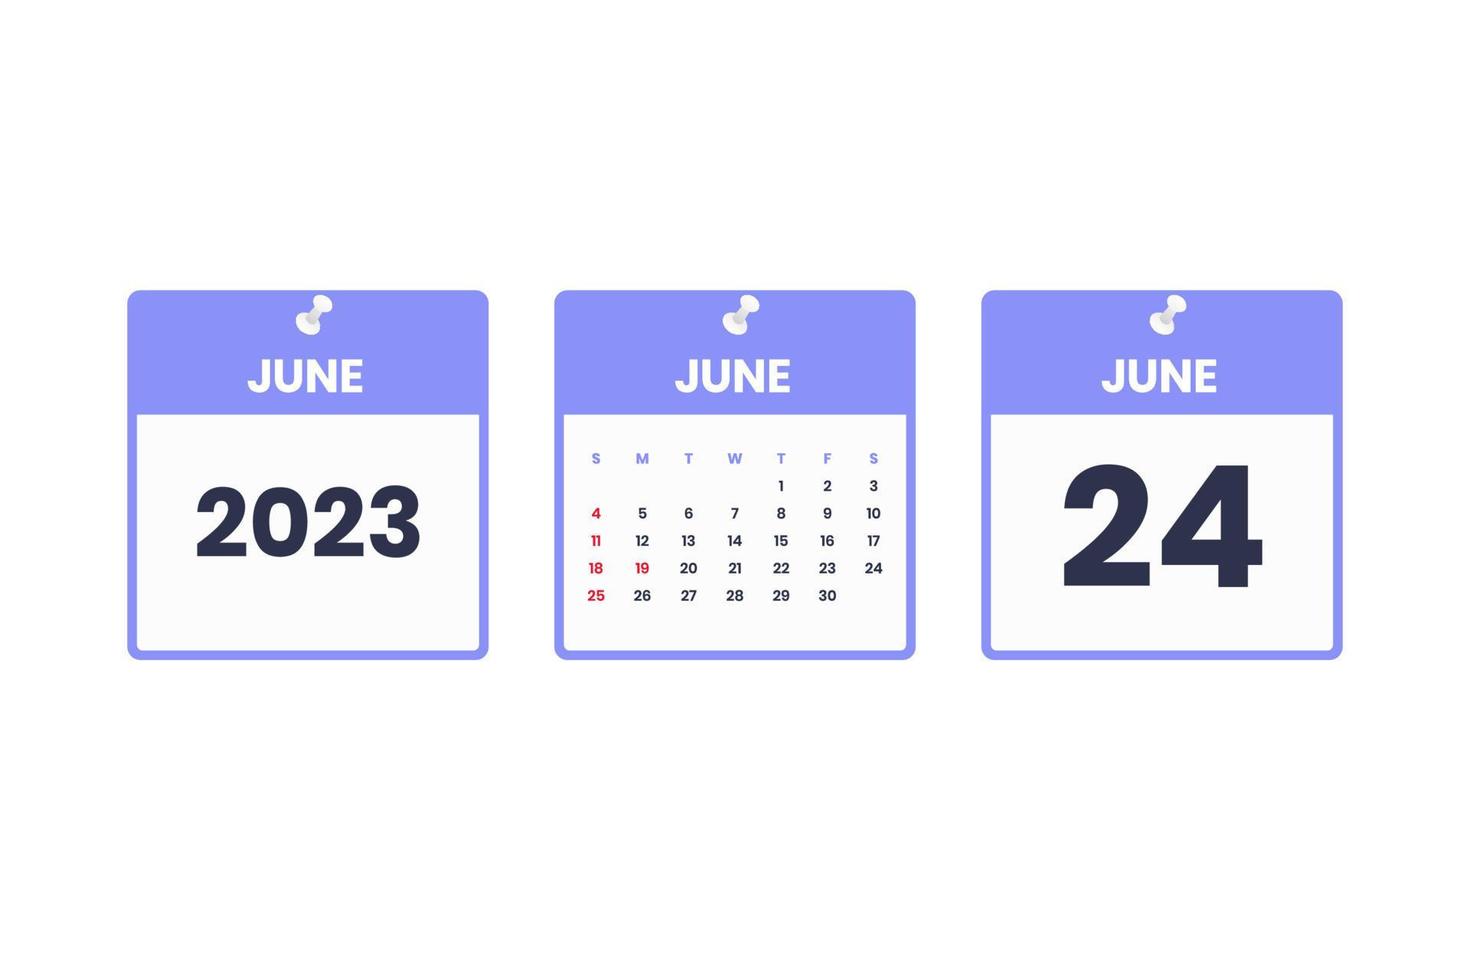 June calendar design. June 24 2023 calendar icon for schedule, appointment, important date concept vector